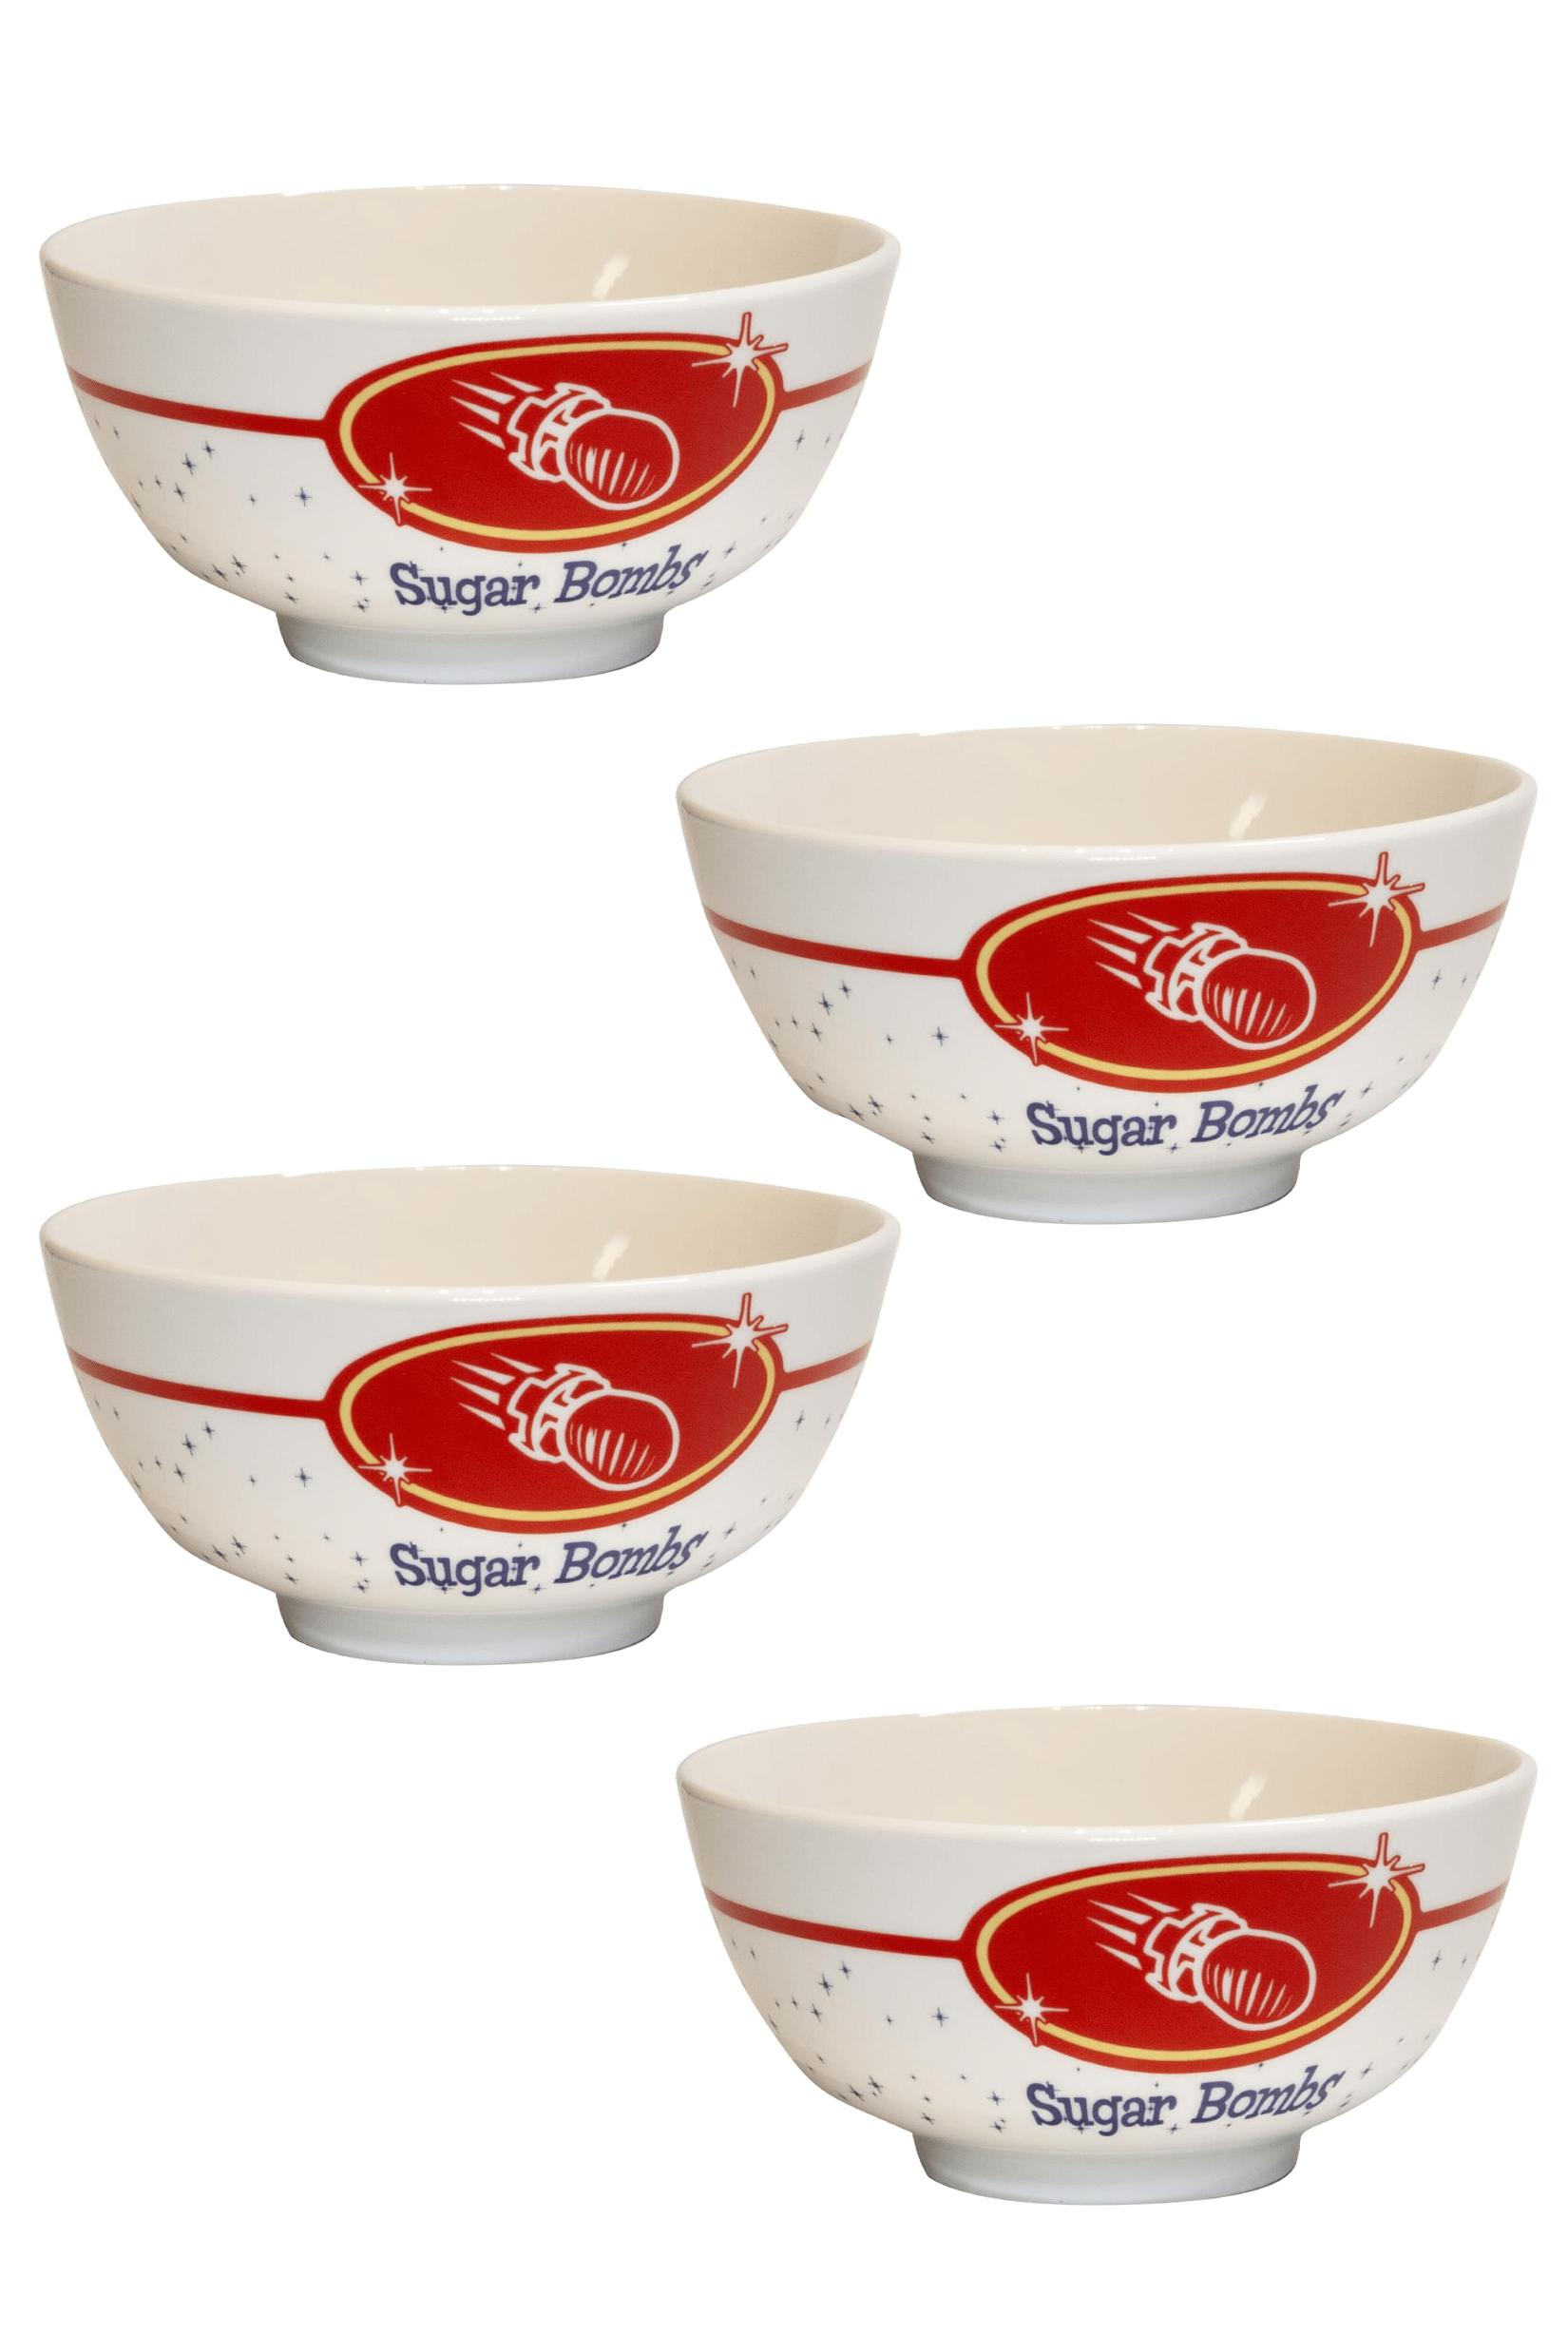 Fallout Sugar Bombs 20oz Ceramic Cereal Bowl | Set of 4